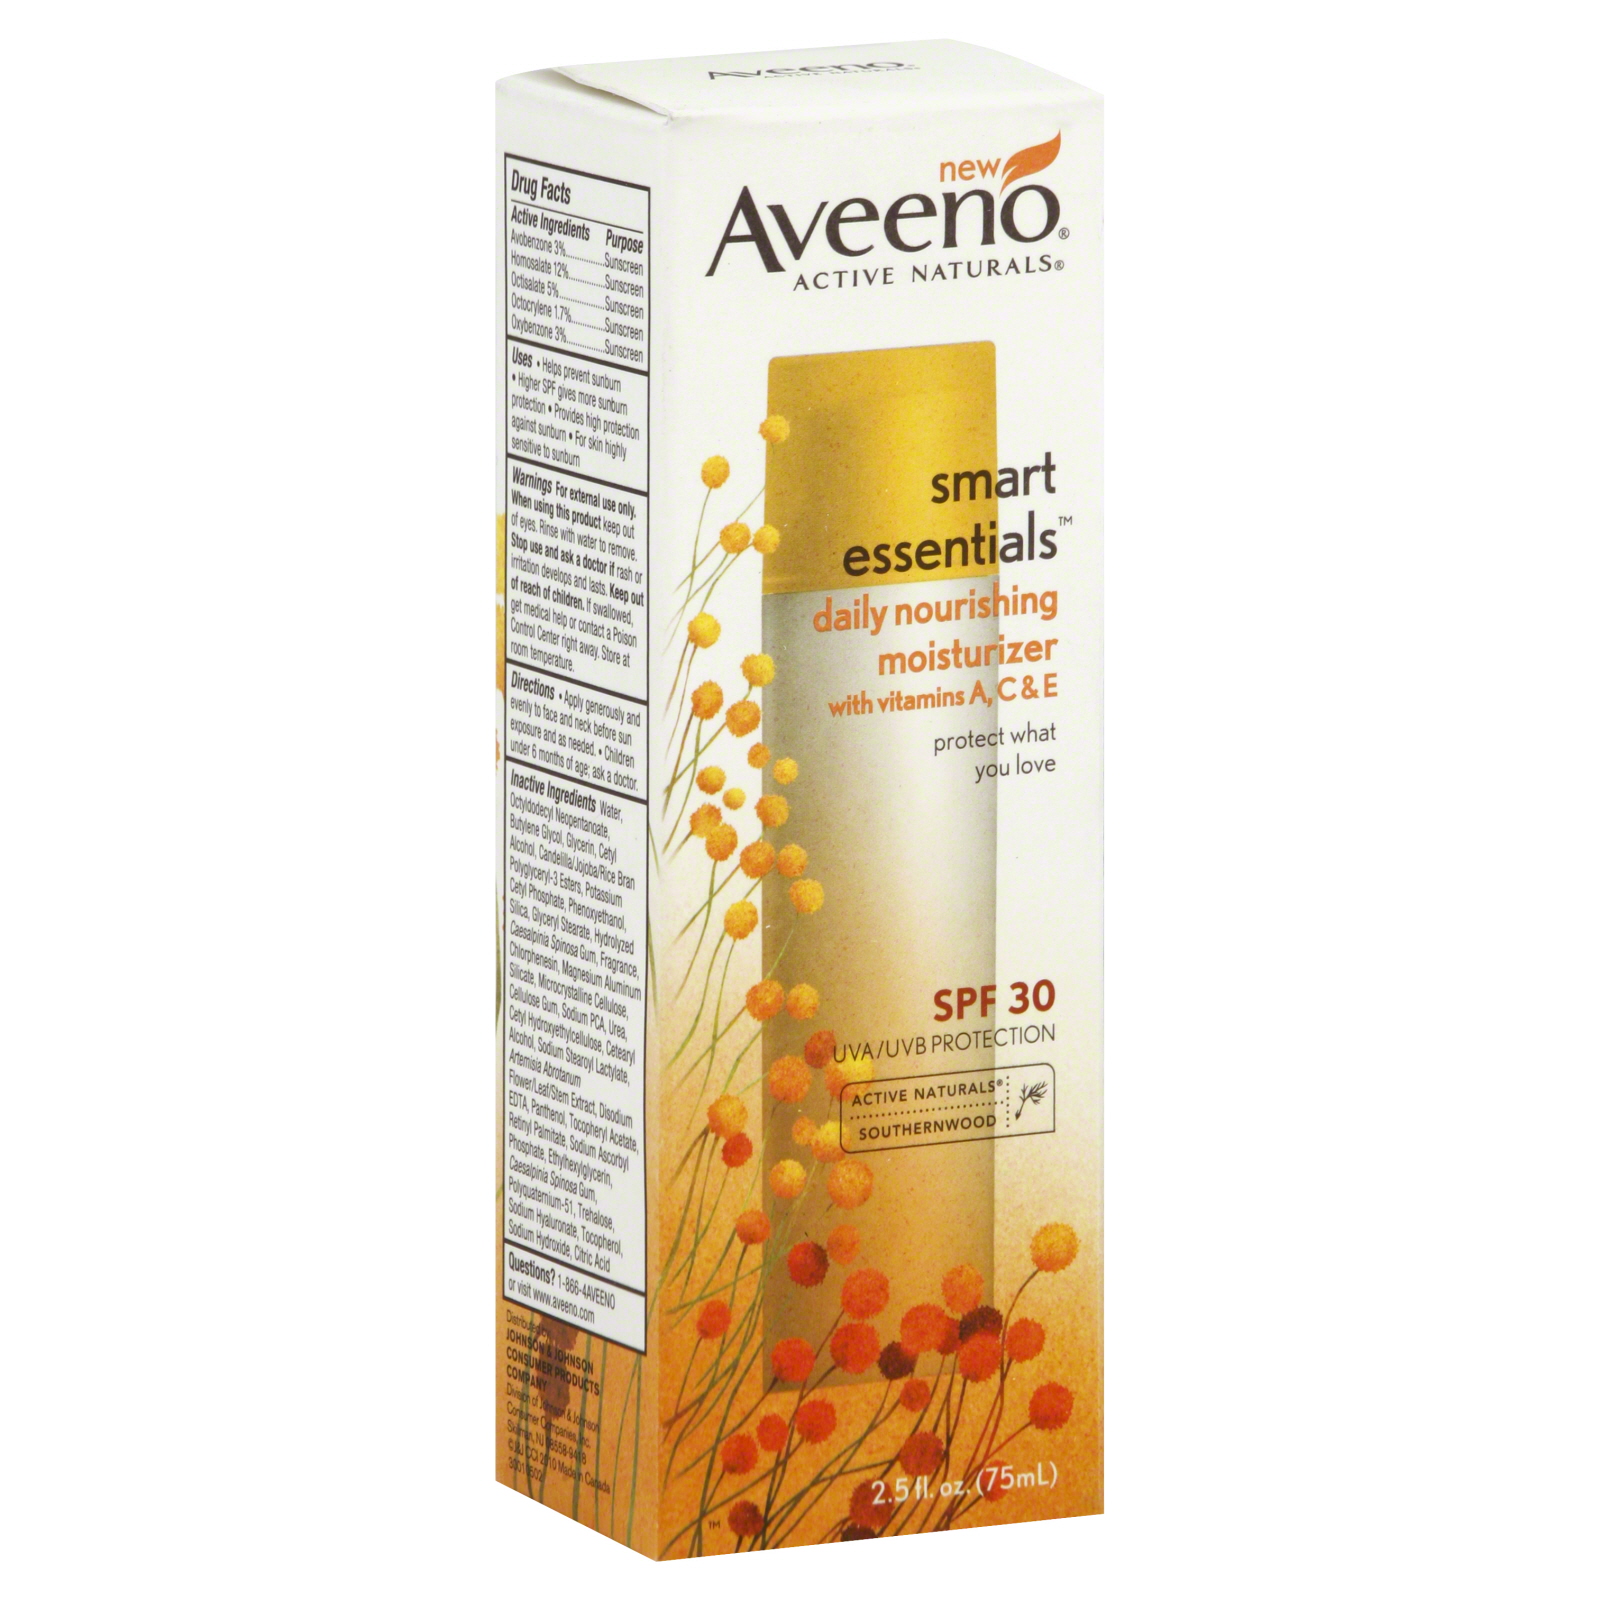 Aveeno Active Naturals Smart Essentials Daily Nourishing Moisturizer, Southernwood, SPF 30 2.5 fl oz (75 ml)